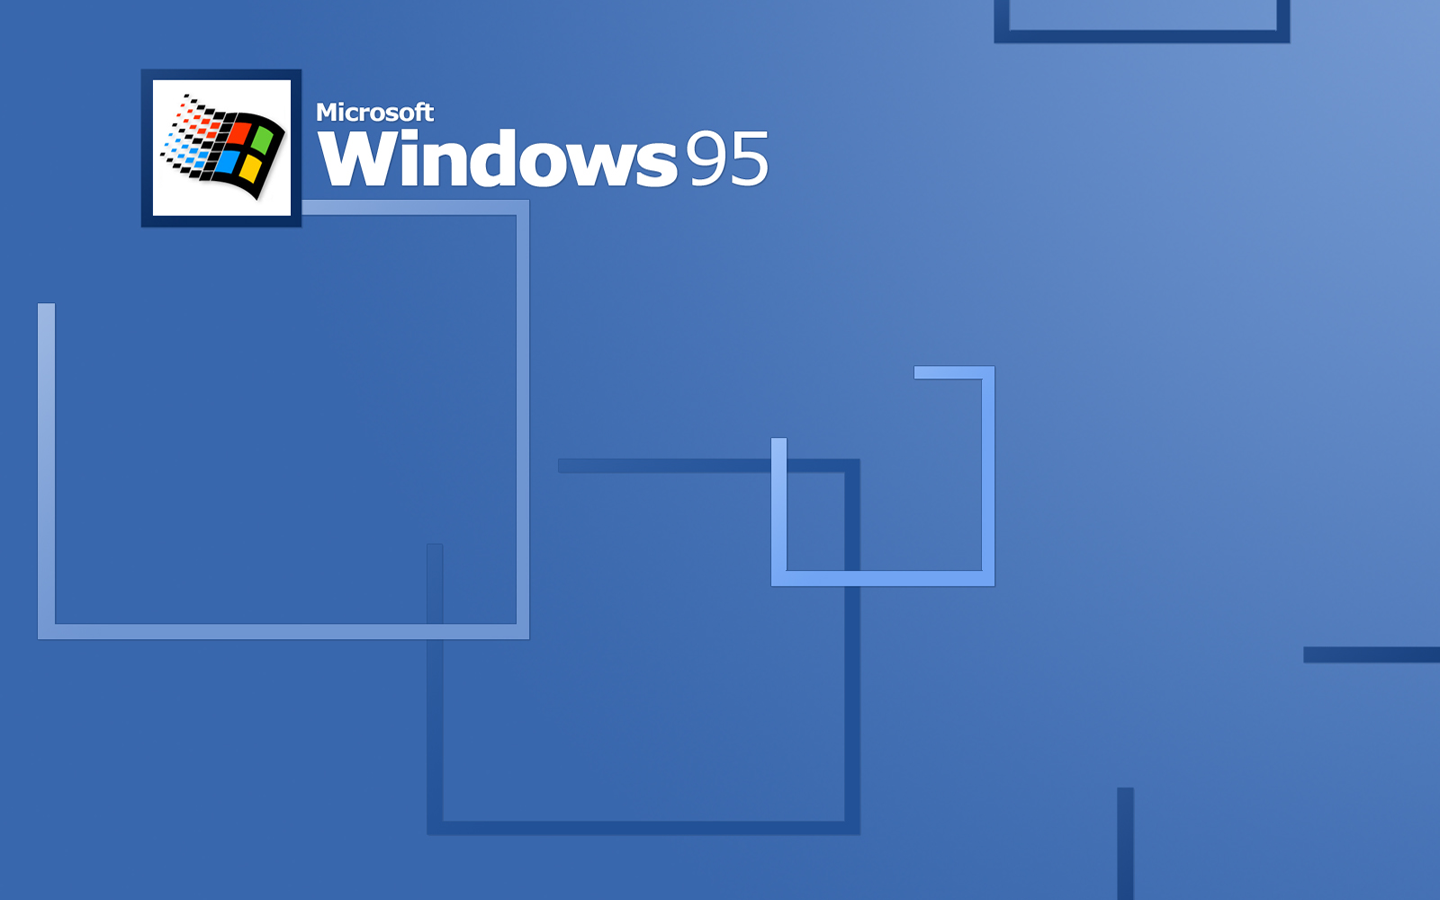 Nice Windows 95 wallpaper Windows 95 wallpapers